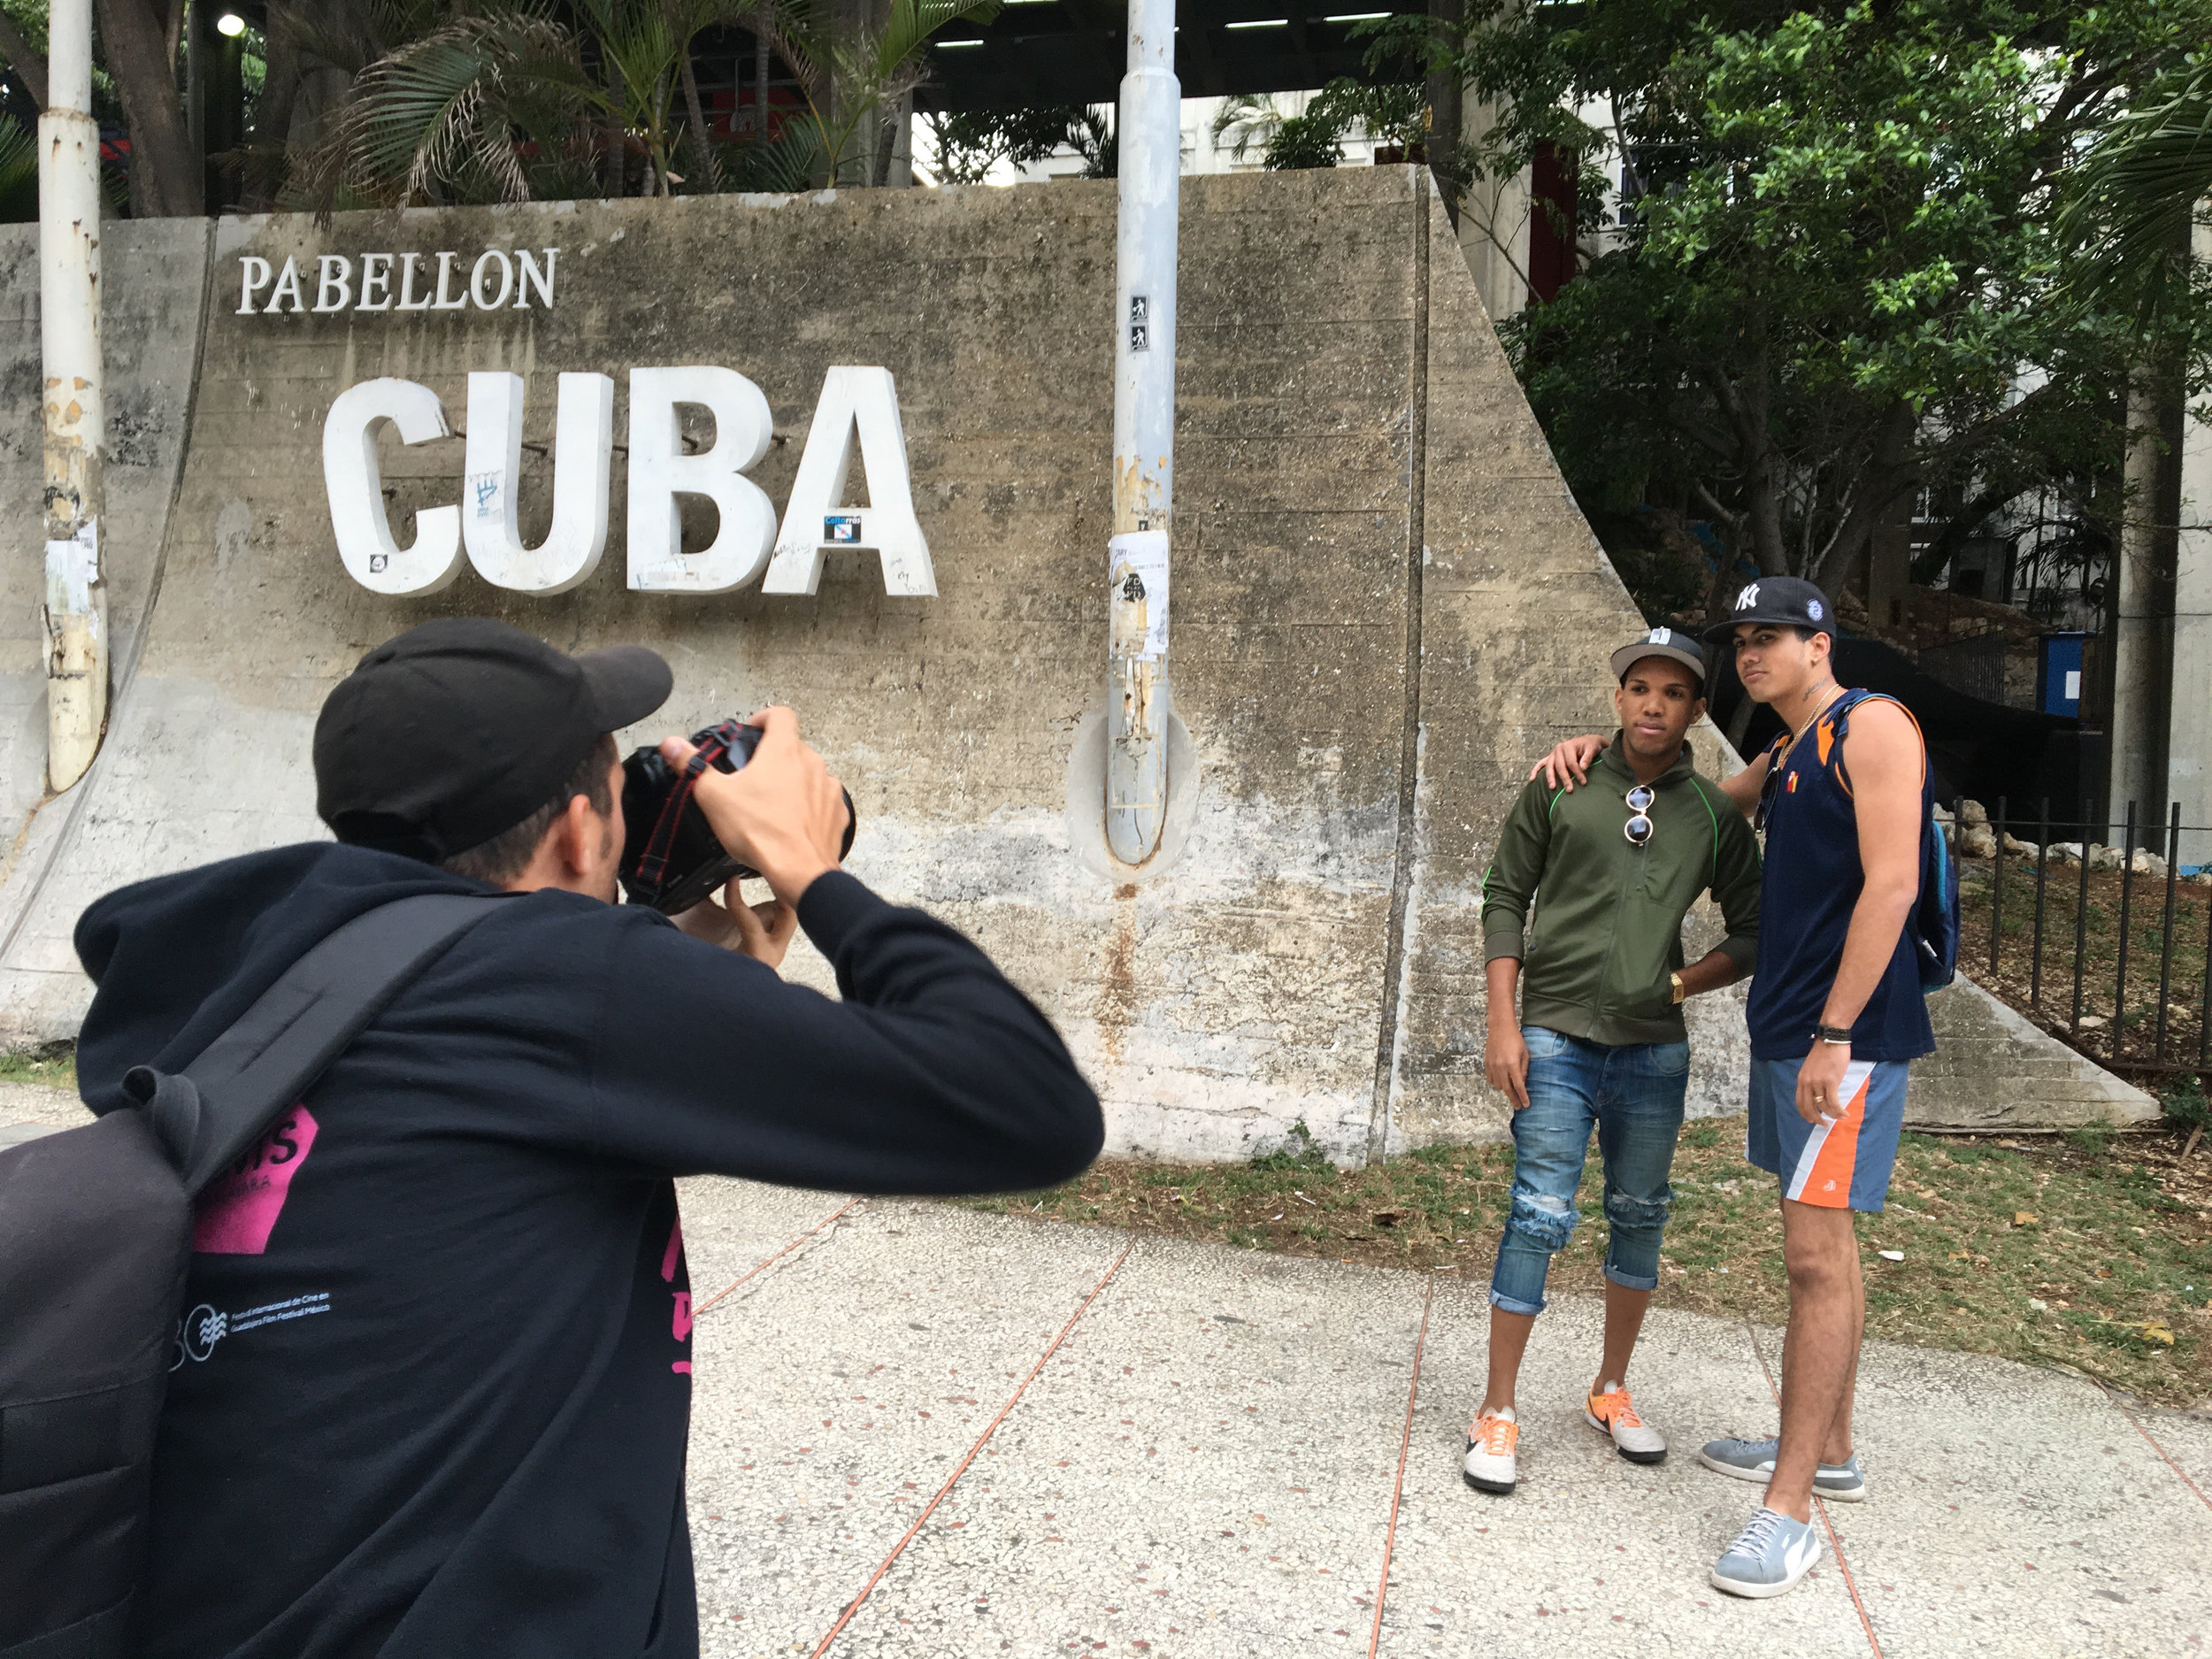  CUBA- One of the camera operator took a picture of Julián Pérez González next to the Pabellon Cuba.

Uno de los operadores de cámara tomó una foto de Julián Pérez González junto al Pabellón Cuba.
(Photo Credit: National Geographic Channels/ Kimberly